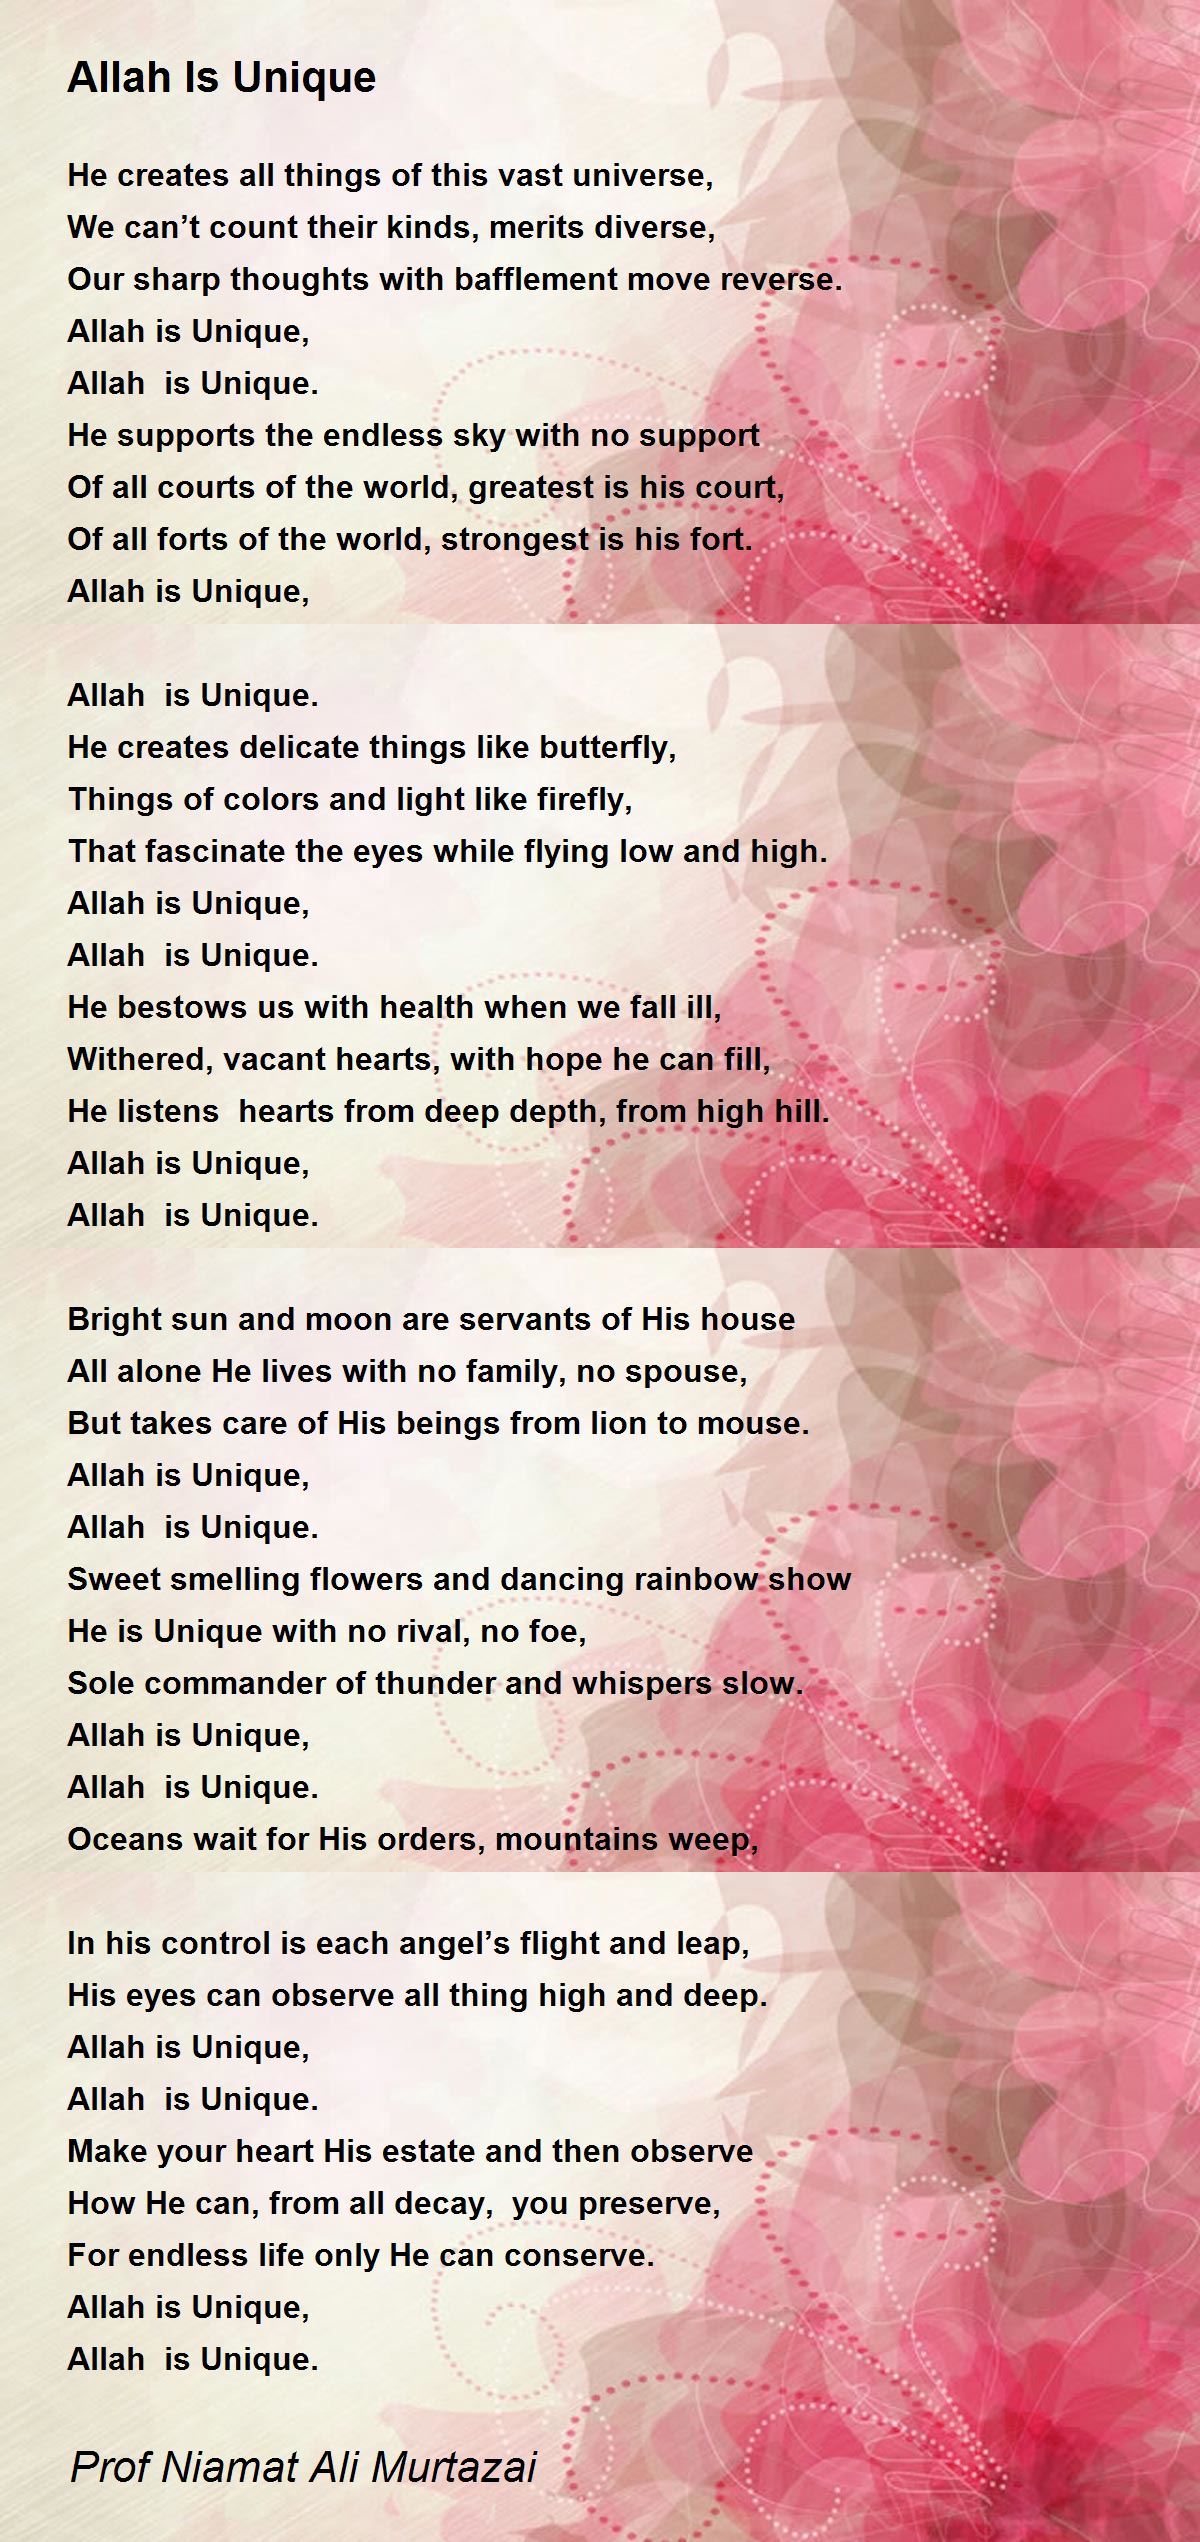 Philosophy - Philosophy Poem by Prof Niamat Ali Murtazai